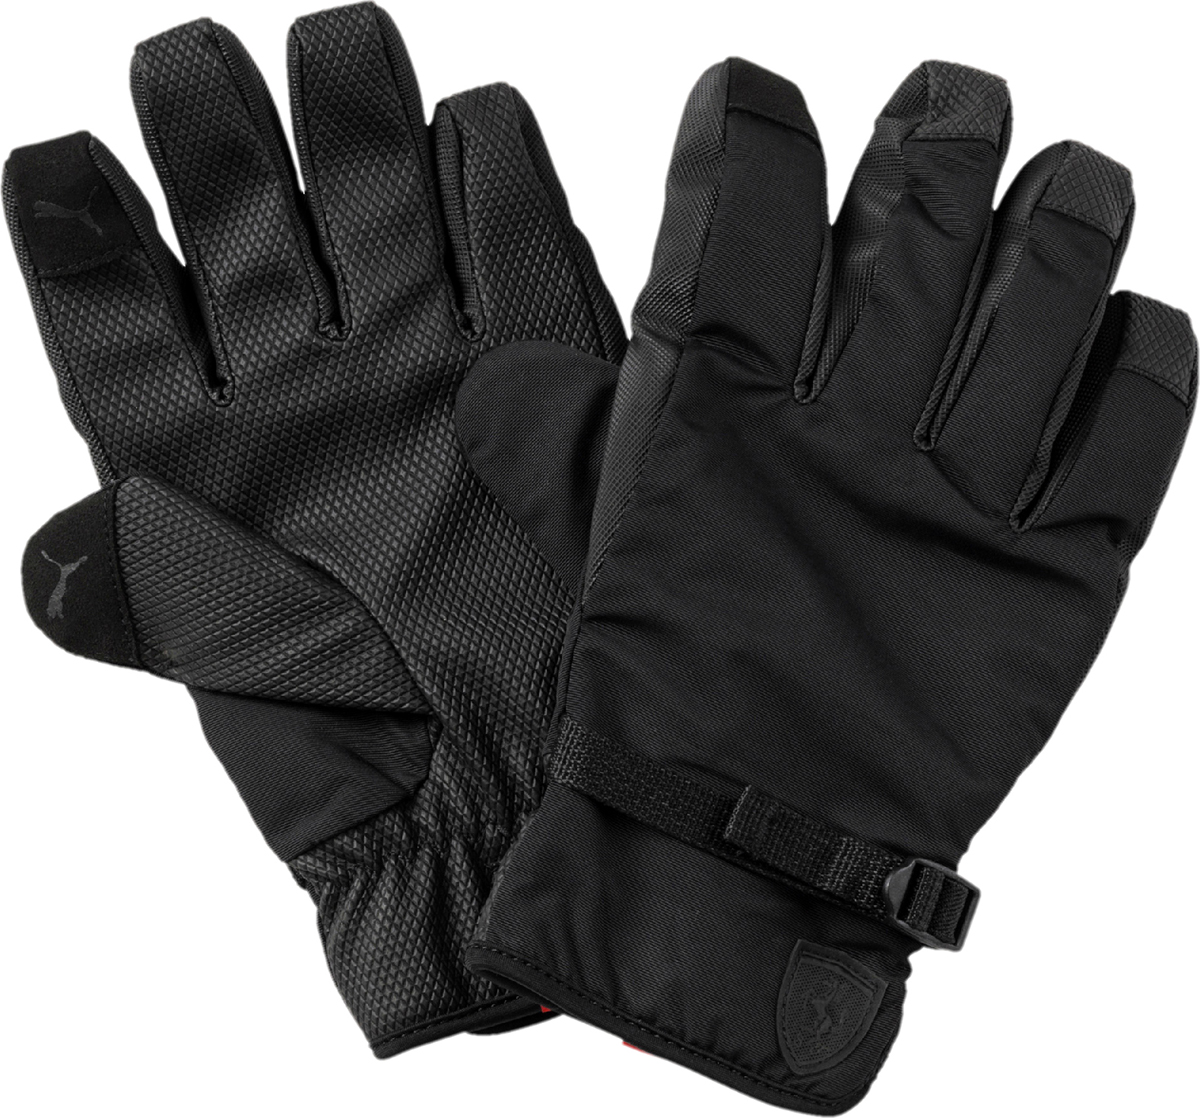 Перчатки Puma Sf Ls Gloves, цвет: черный. 04146801. Размер M/L (8)